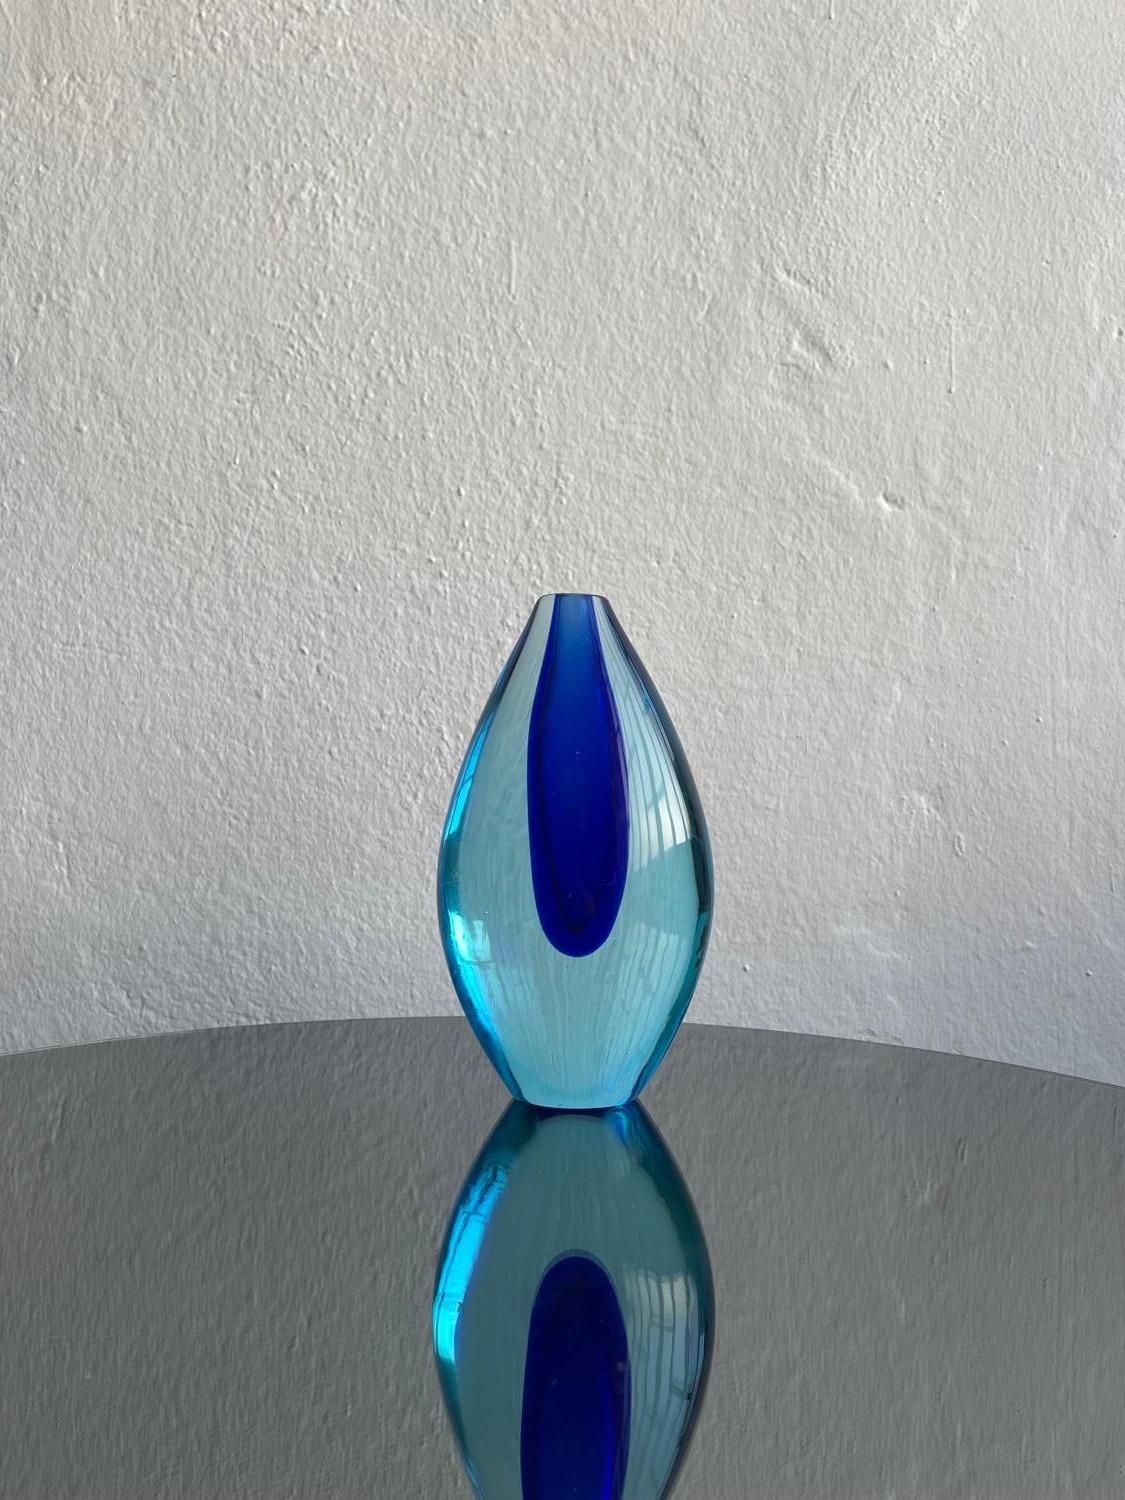 Flavio Poli for Seguso - Sommerso Murano vase - Collectible Glass

